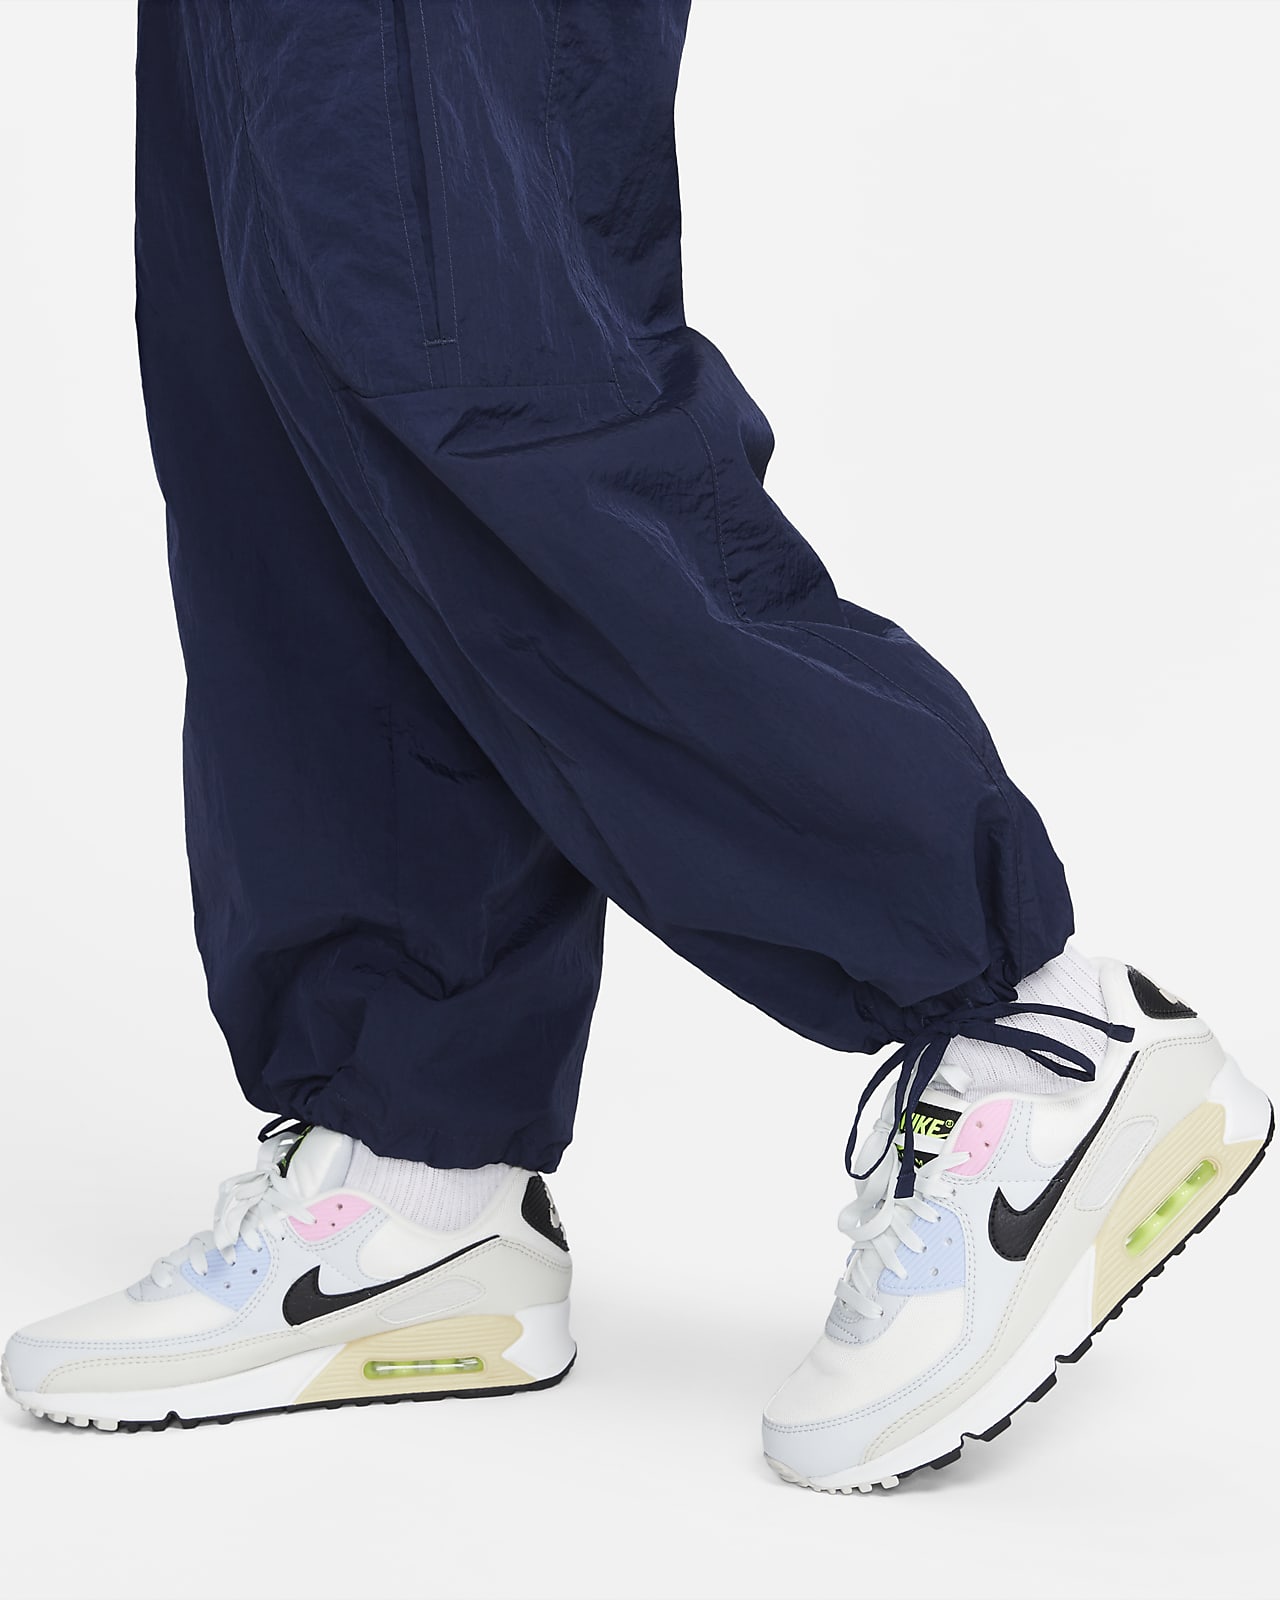 Nike Trend woven baggy parachute pants in smokey mauve